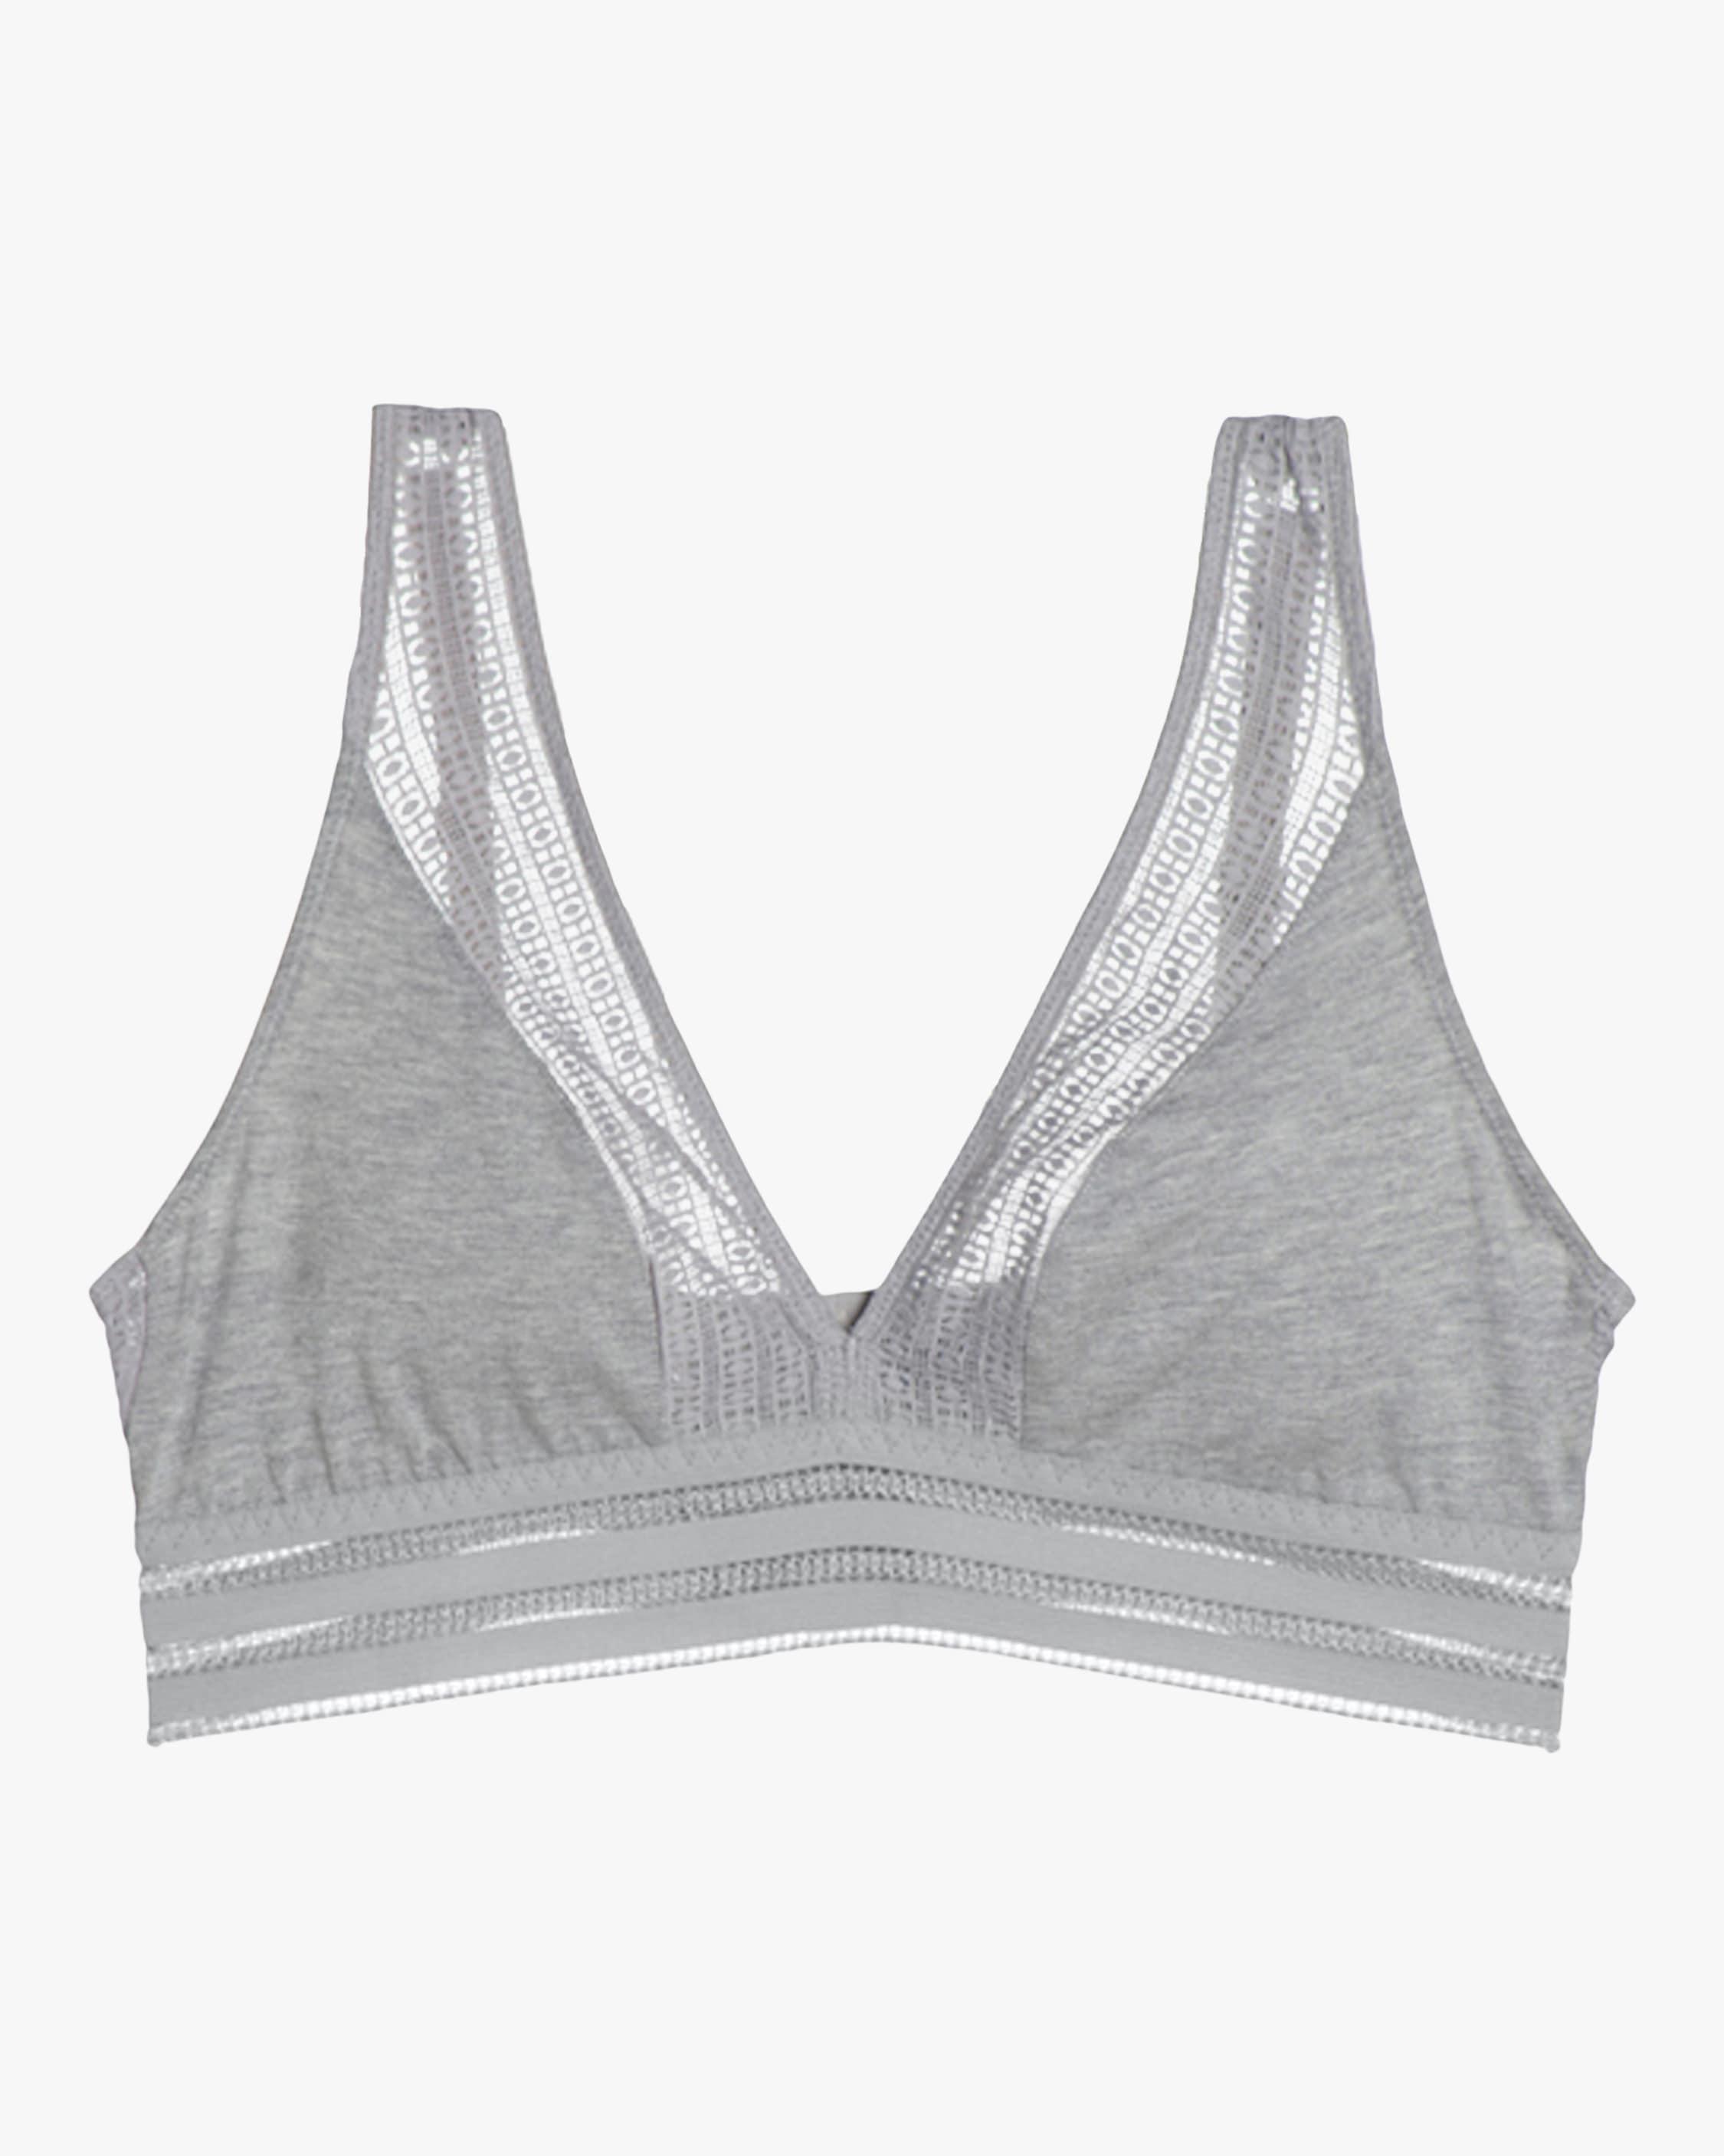 Else Cotton Women's Jolie Soft Triangle Bra in Grey (Gray) - Lyst